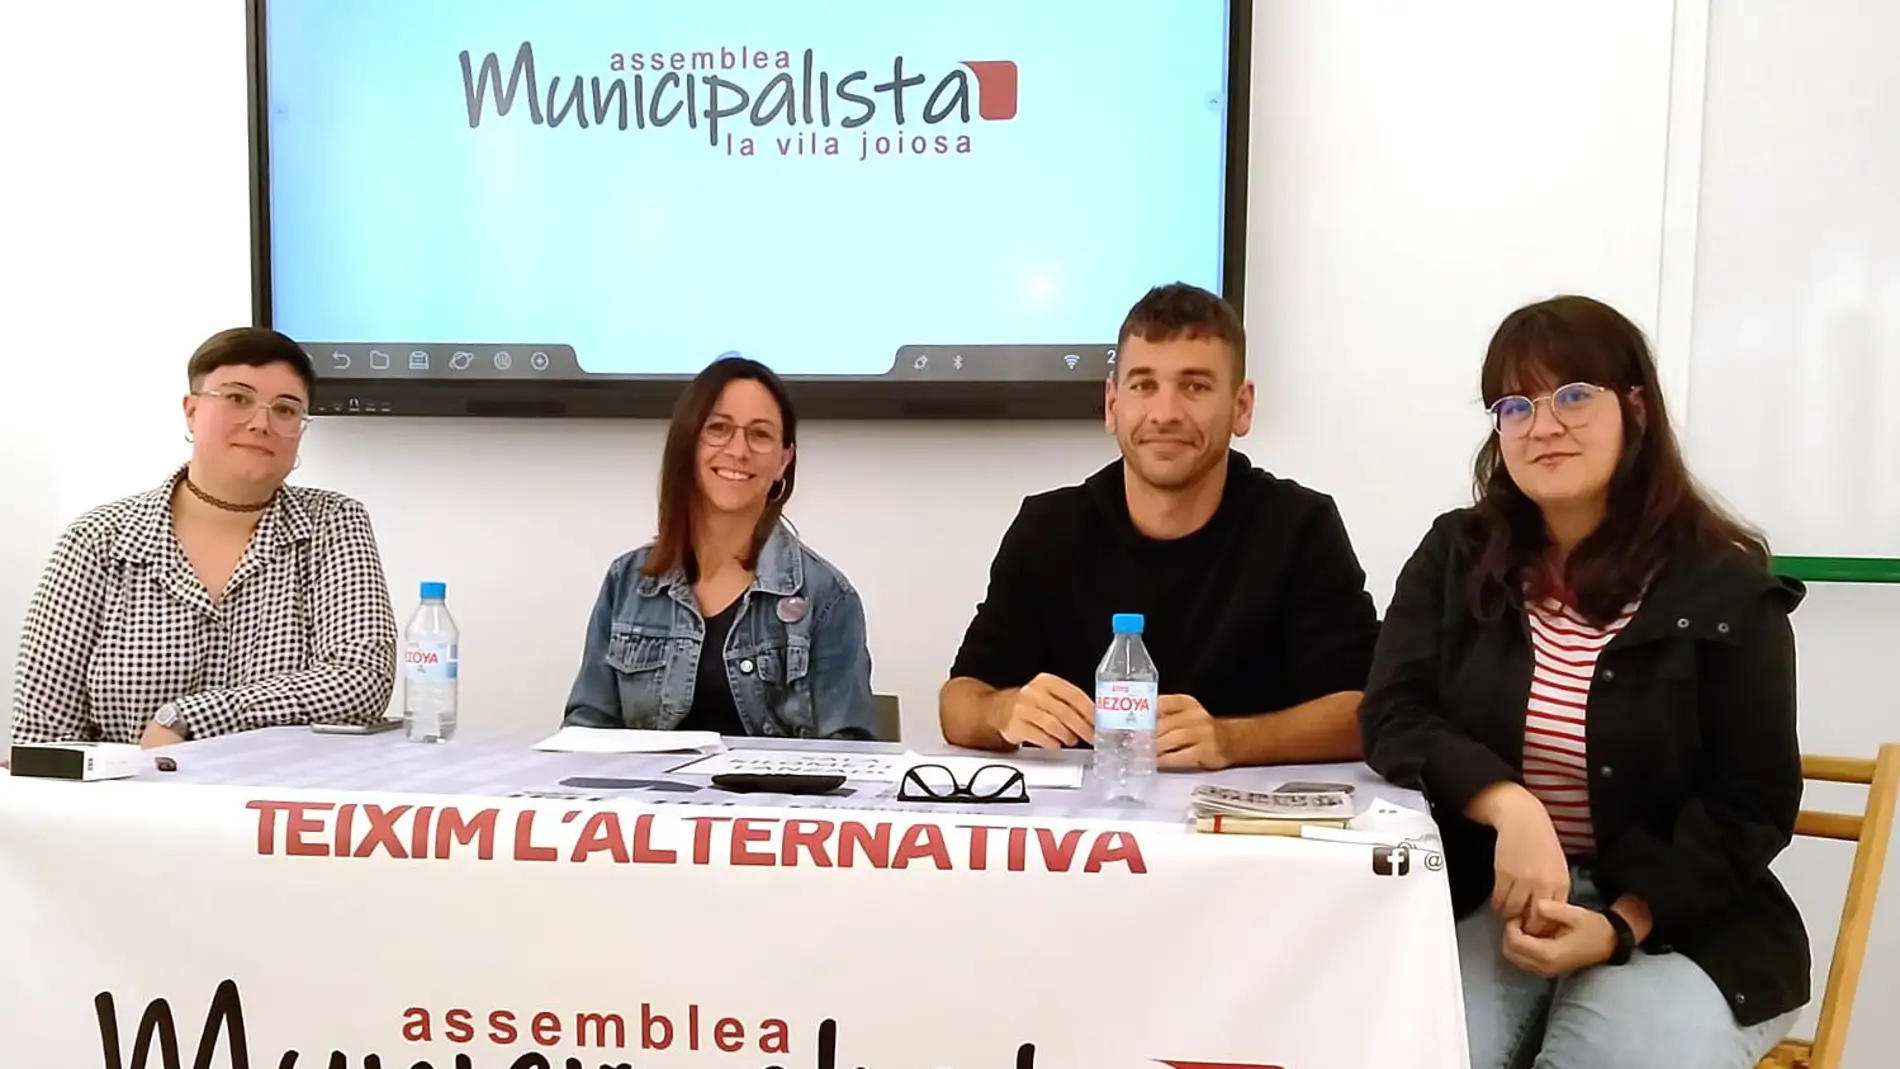 Assemblea Municipalista presenta candidatura en La Vila Joiosa junto con Podem e IU